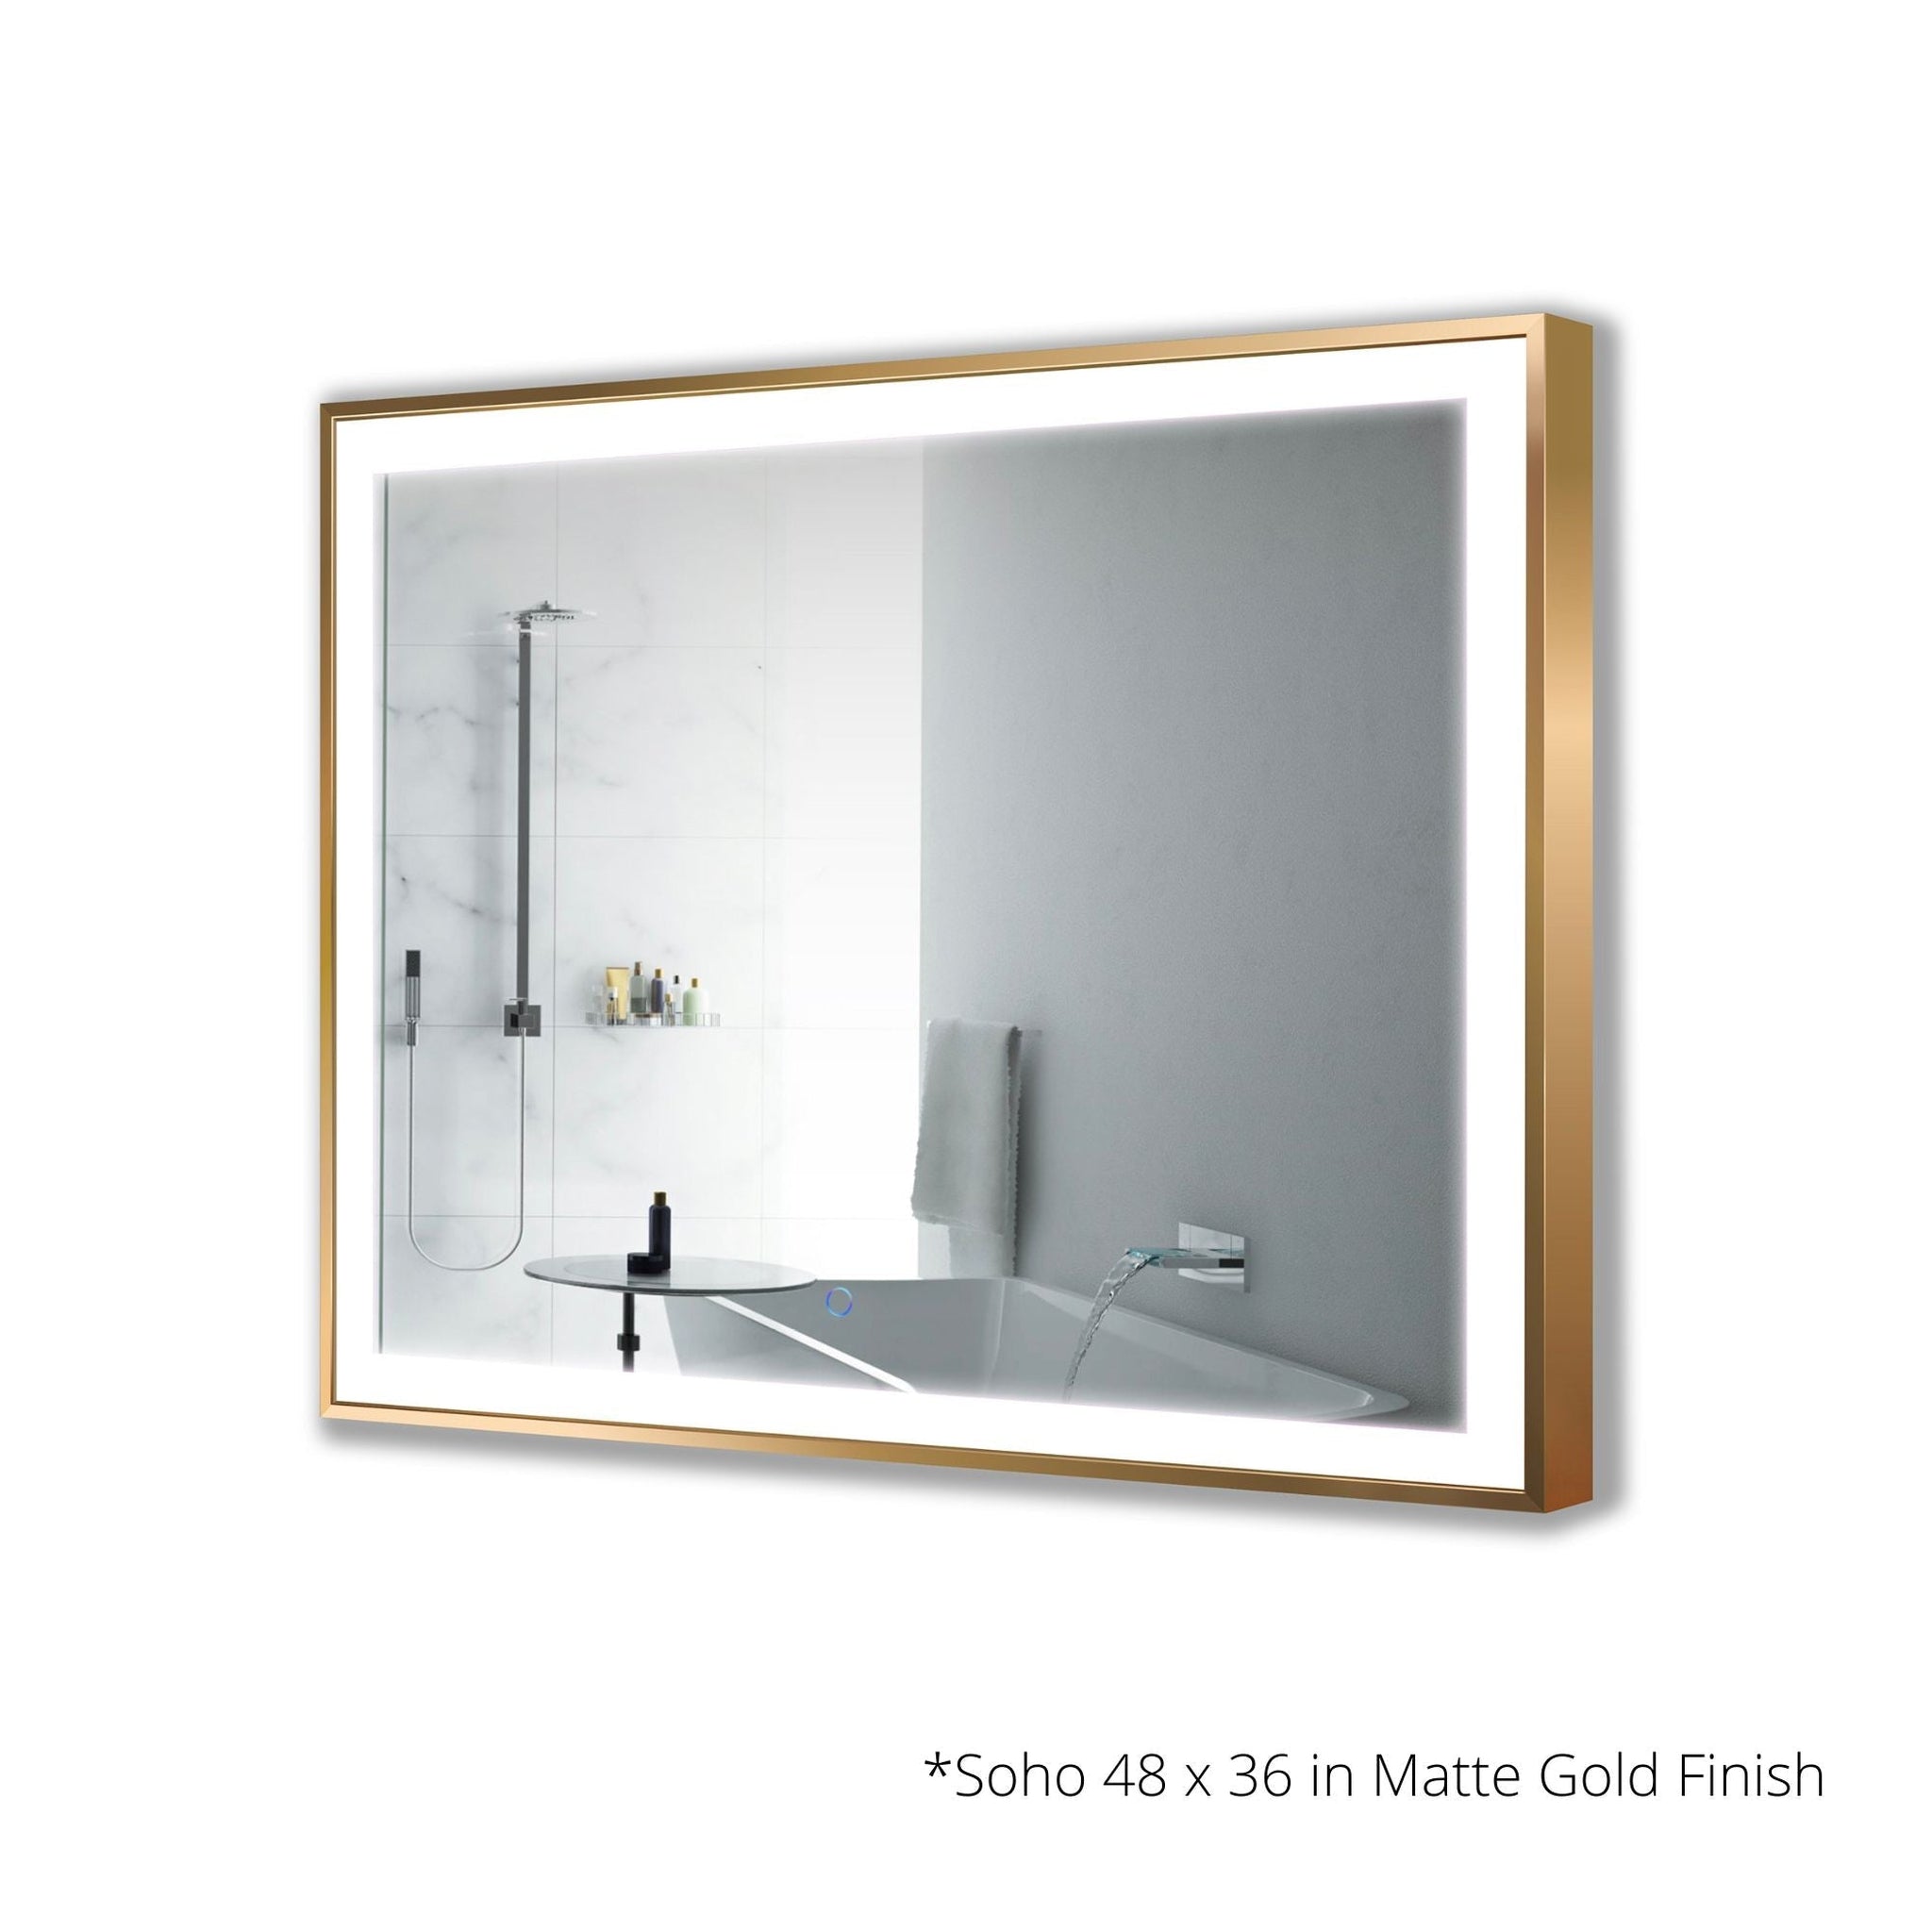 Krugg Reflections, Krugg Reflections Soho 48" x 36" 5000K Rectangular Matte Black Wall-Mounted Framed LED Bathroom Vanity Mirror With Built-in Defogger and Dimmer